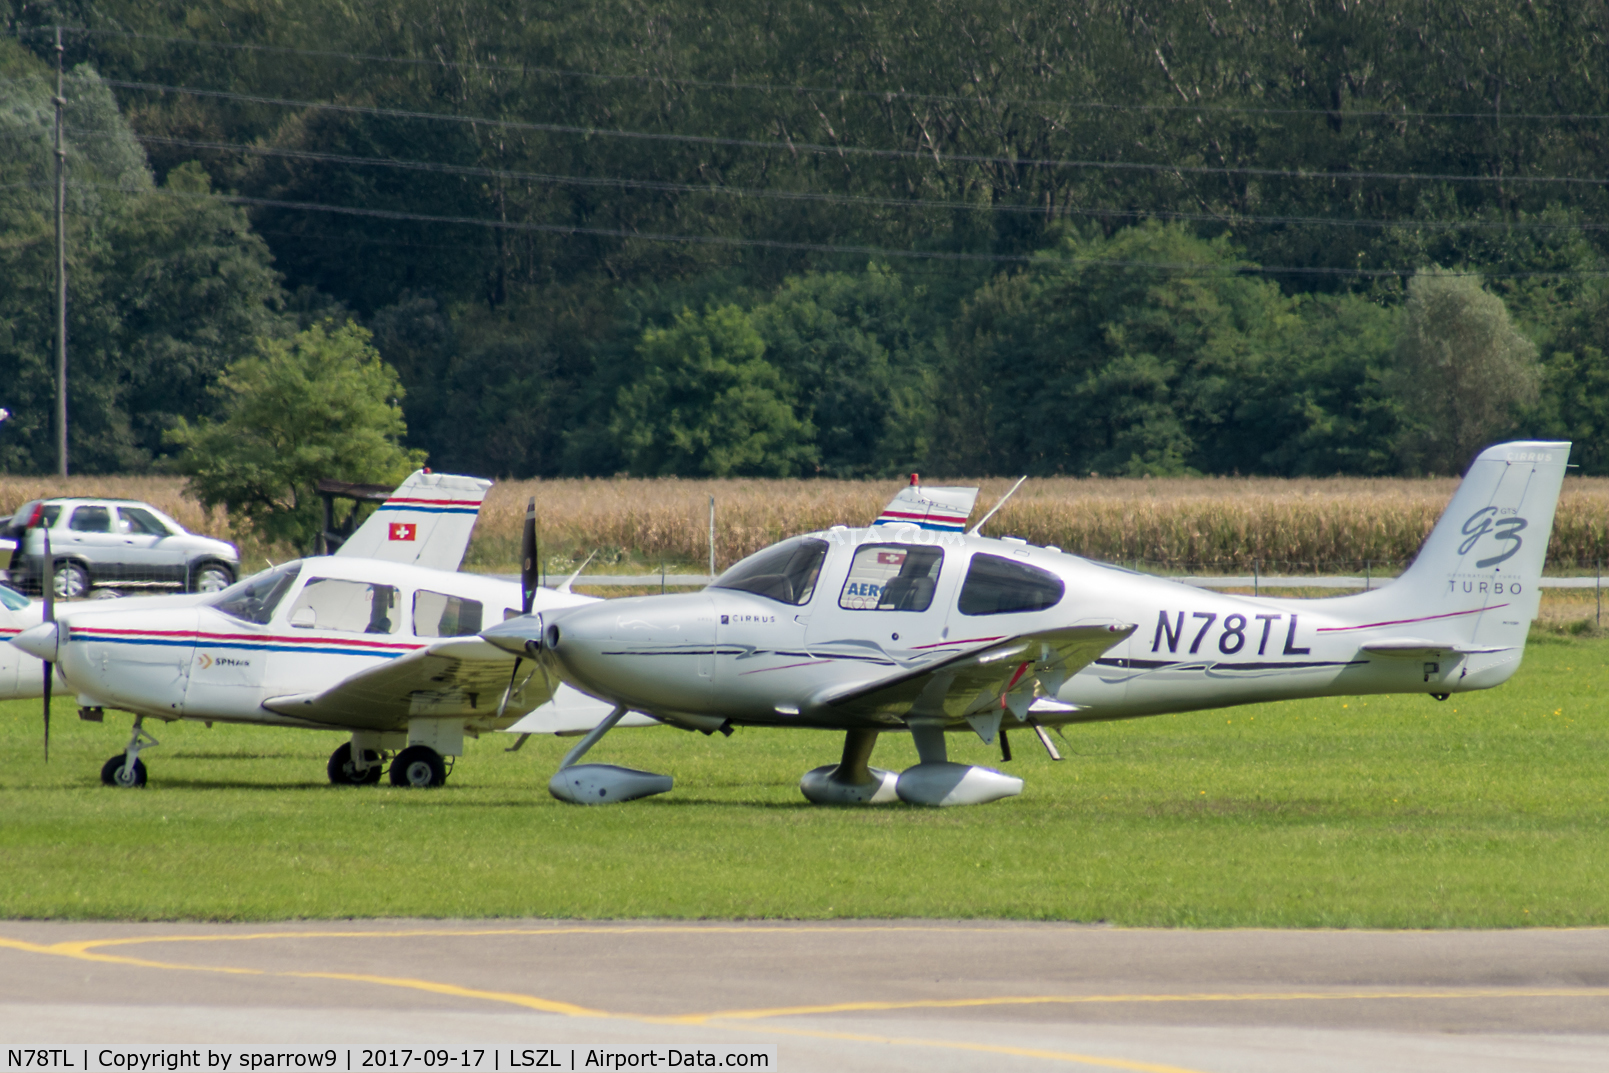 N78TL, 2007 Cirrus SR22 G3 GTS Turbo C/N 2622, In company of older aircraft.